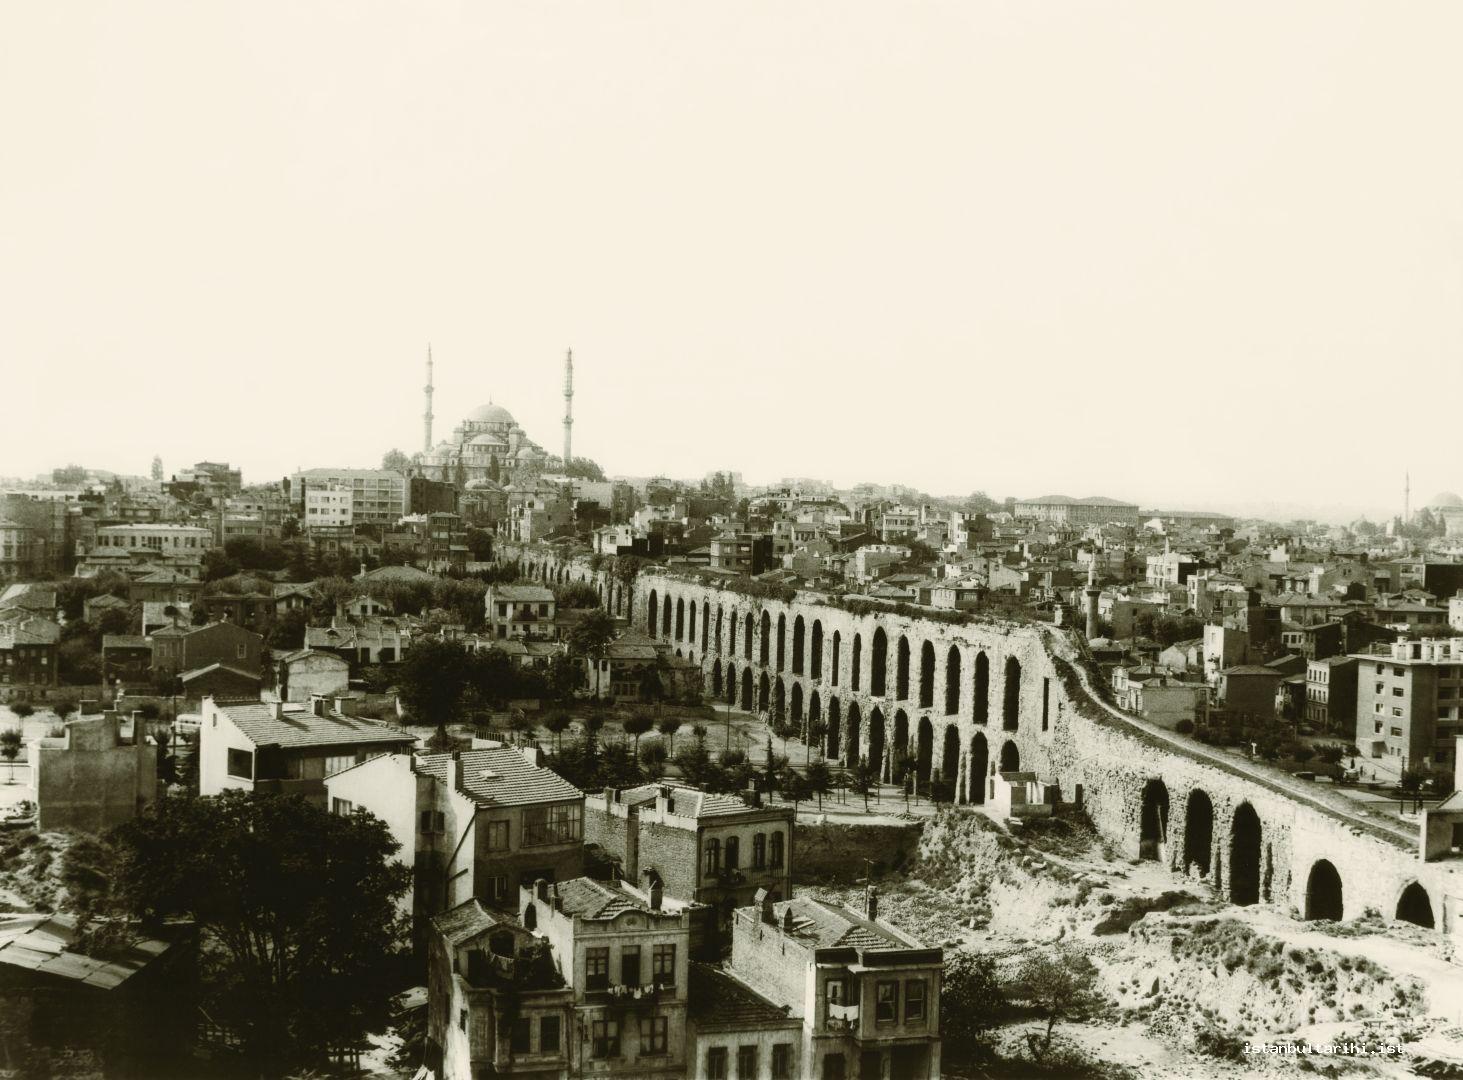 2- The neighborhood of Unkapanı, Saraçhane and Şehzadebaşı districts before public development works